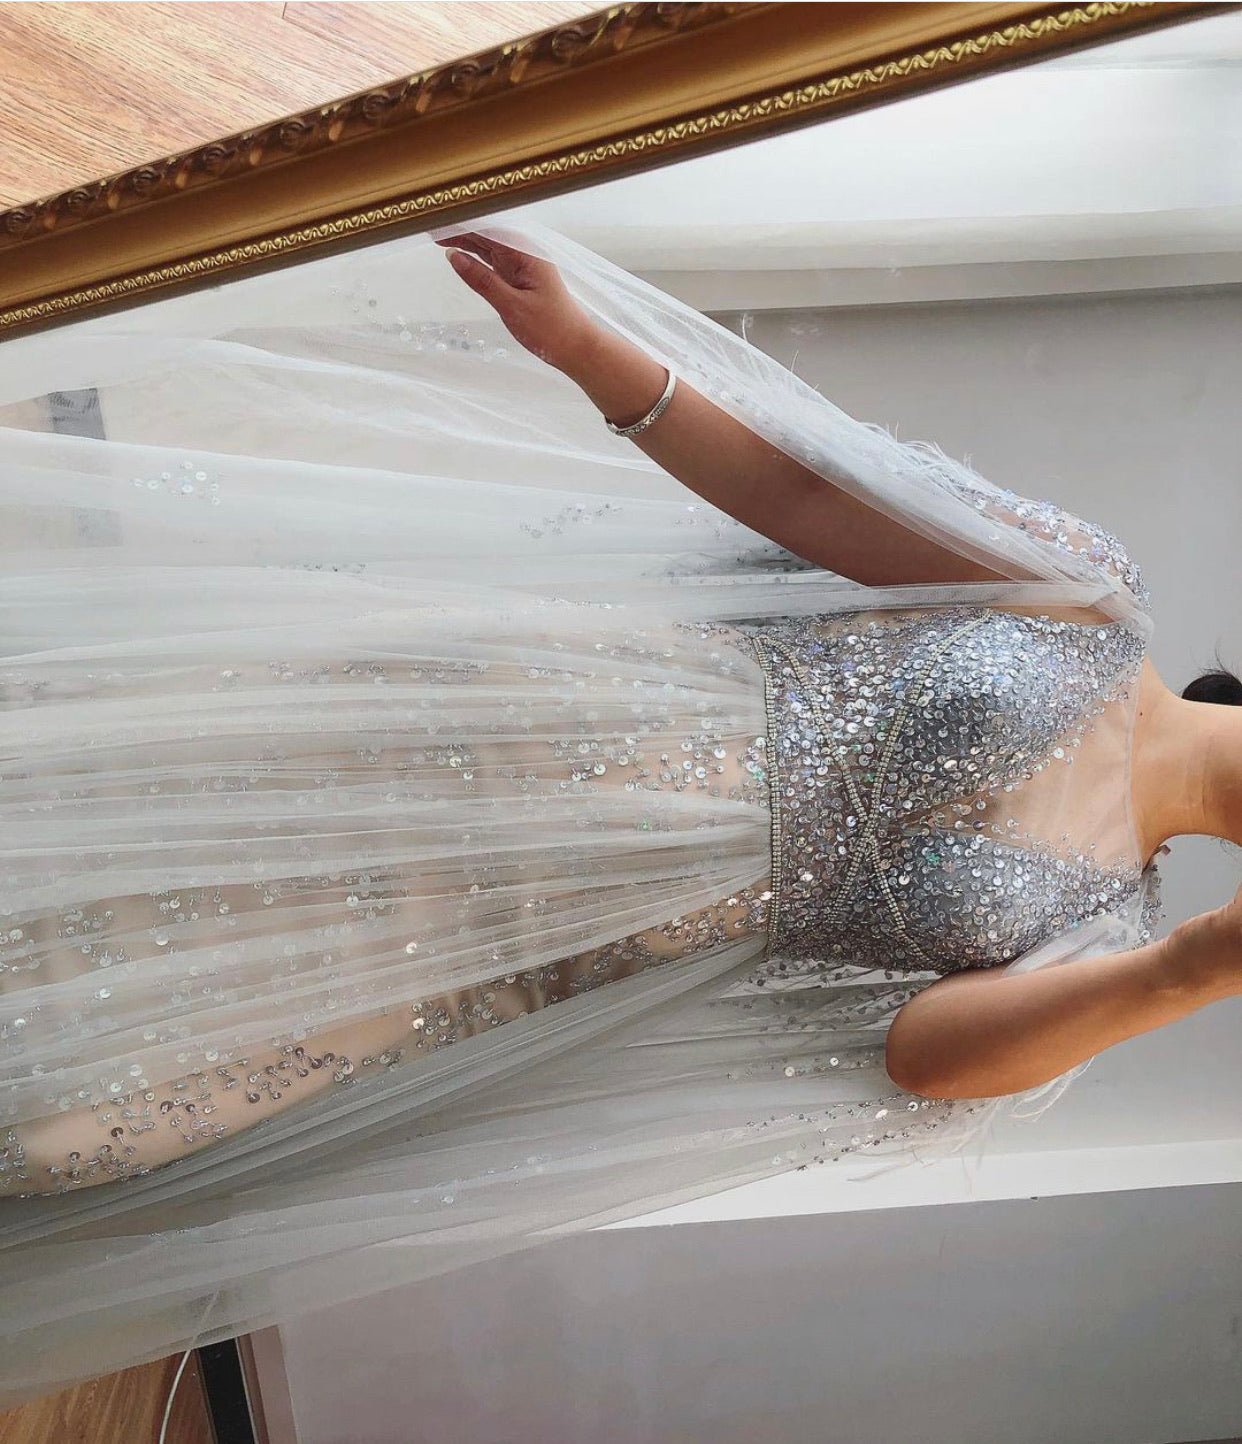 Dahlia Luxury Formal Dress with Feathers Shawl Yarn - Mscooco.co.uk